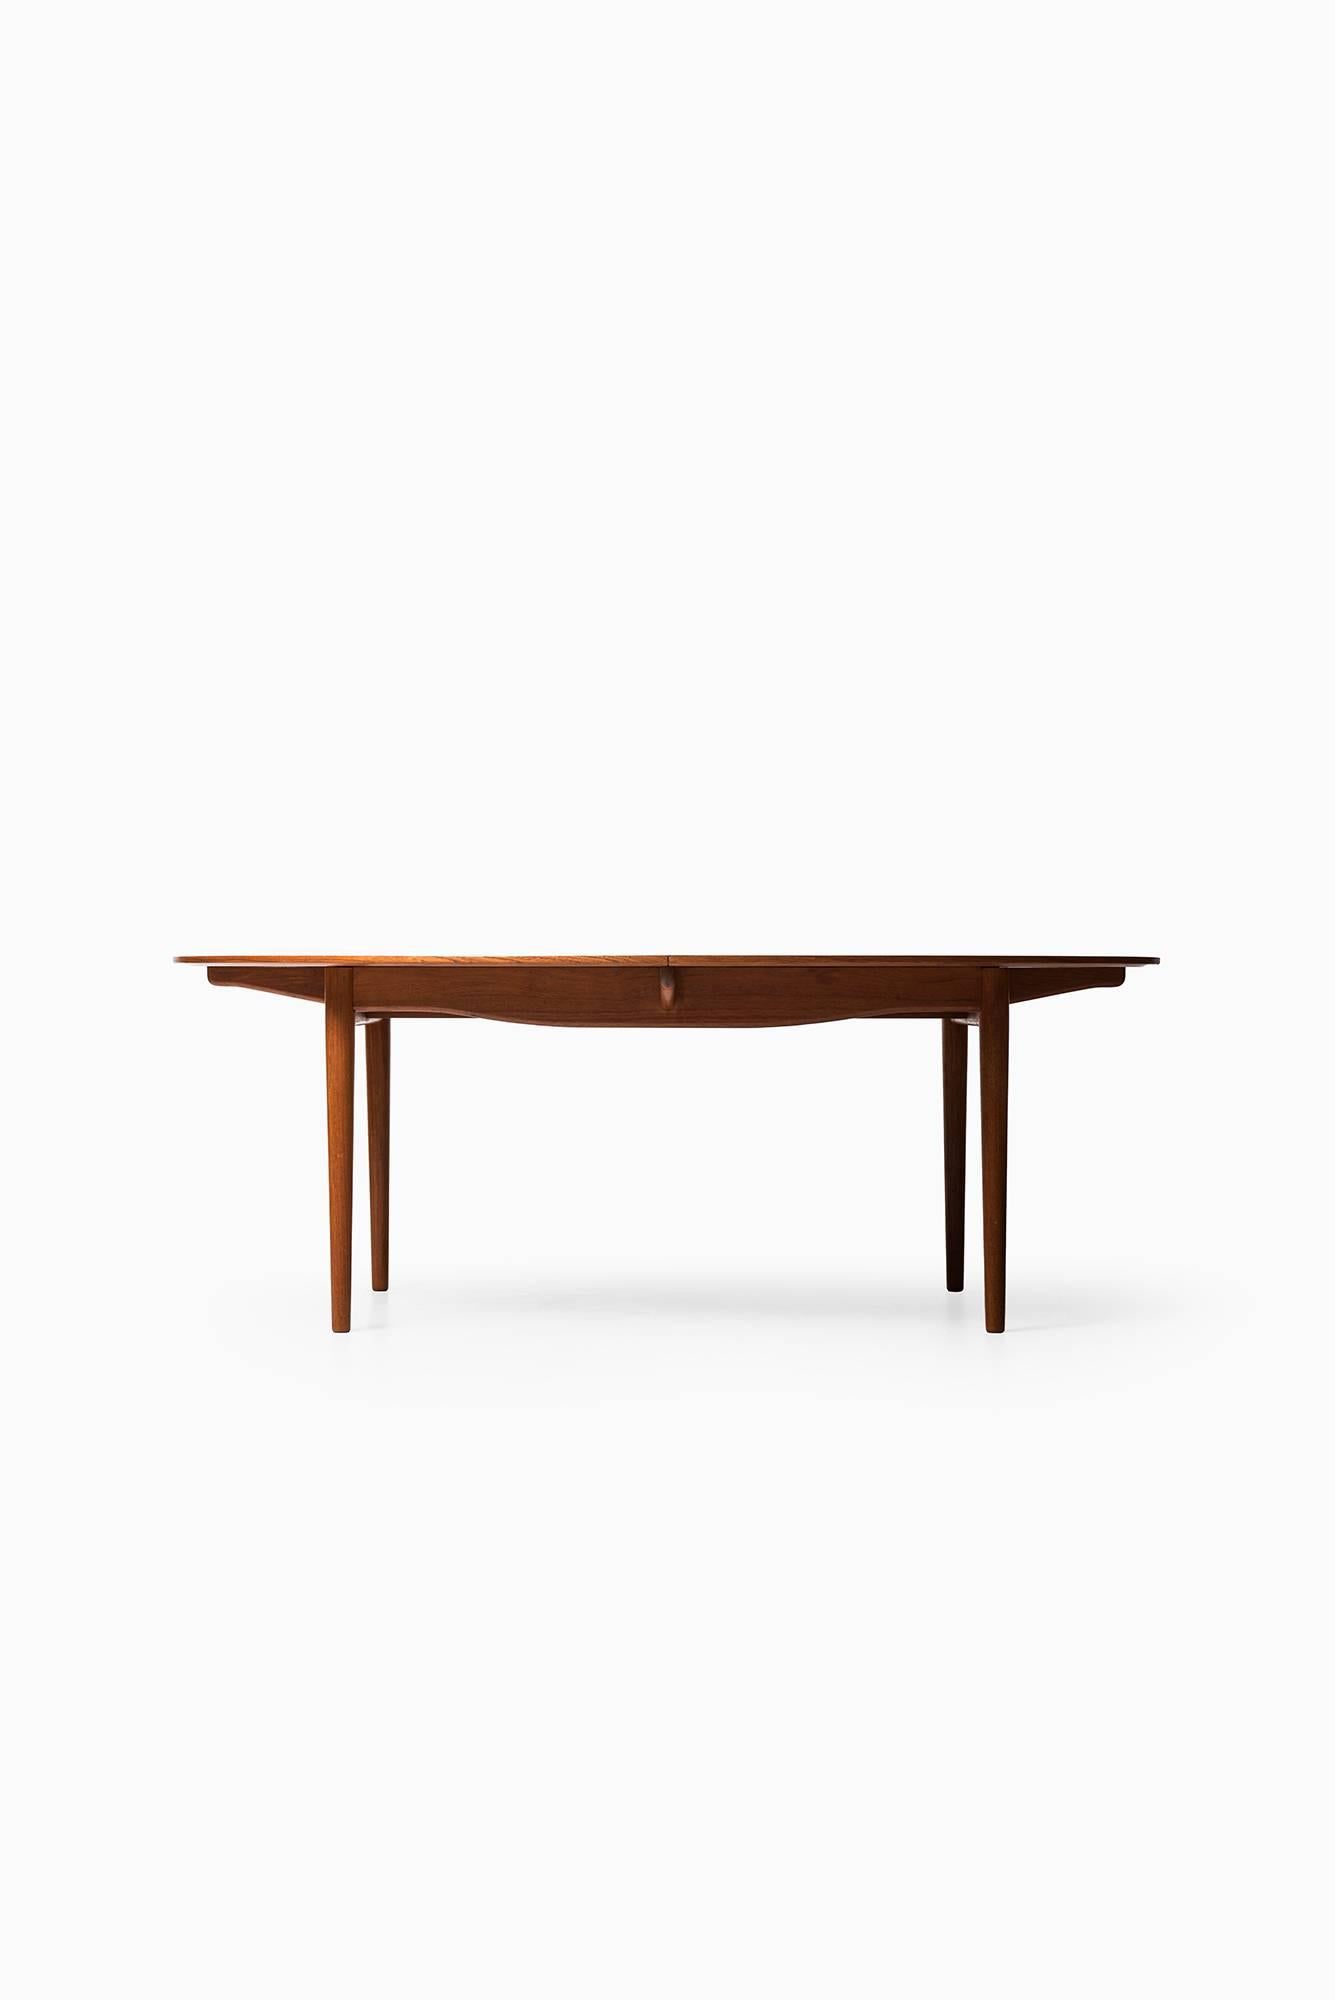 Rare Judas dining table designed by Finn Juhl. Produced by cabinetmaker Niels Vodder in Denmark.